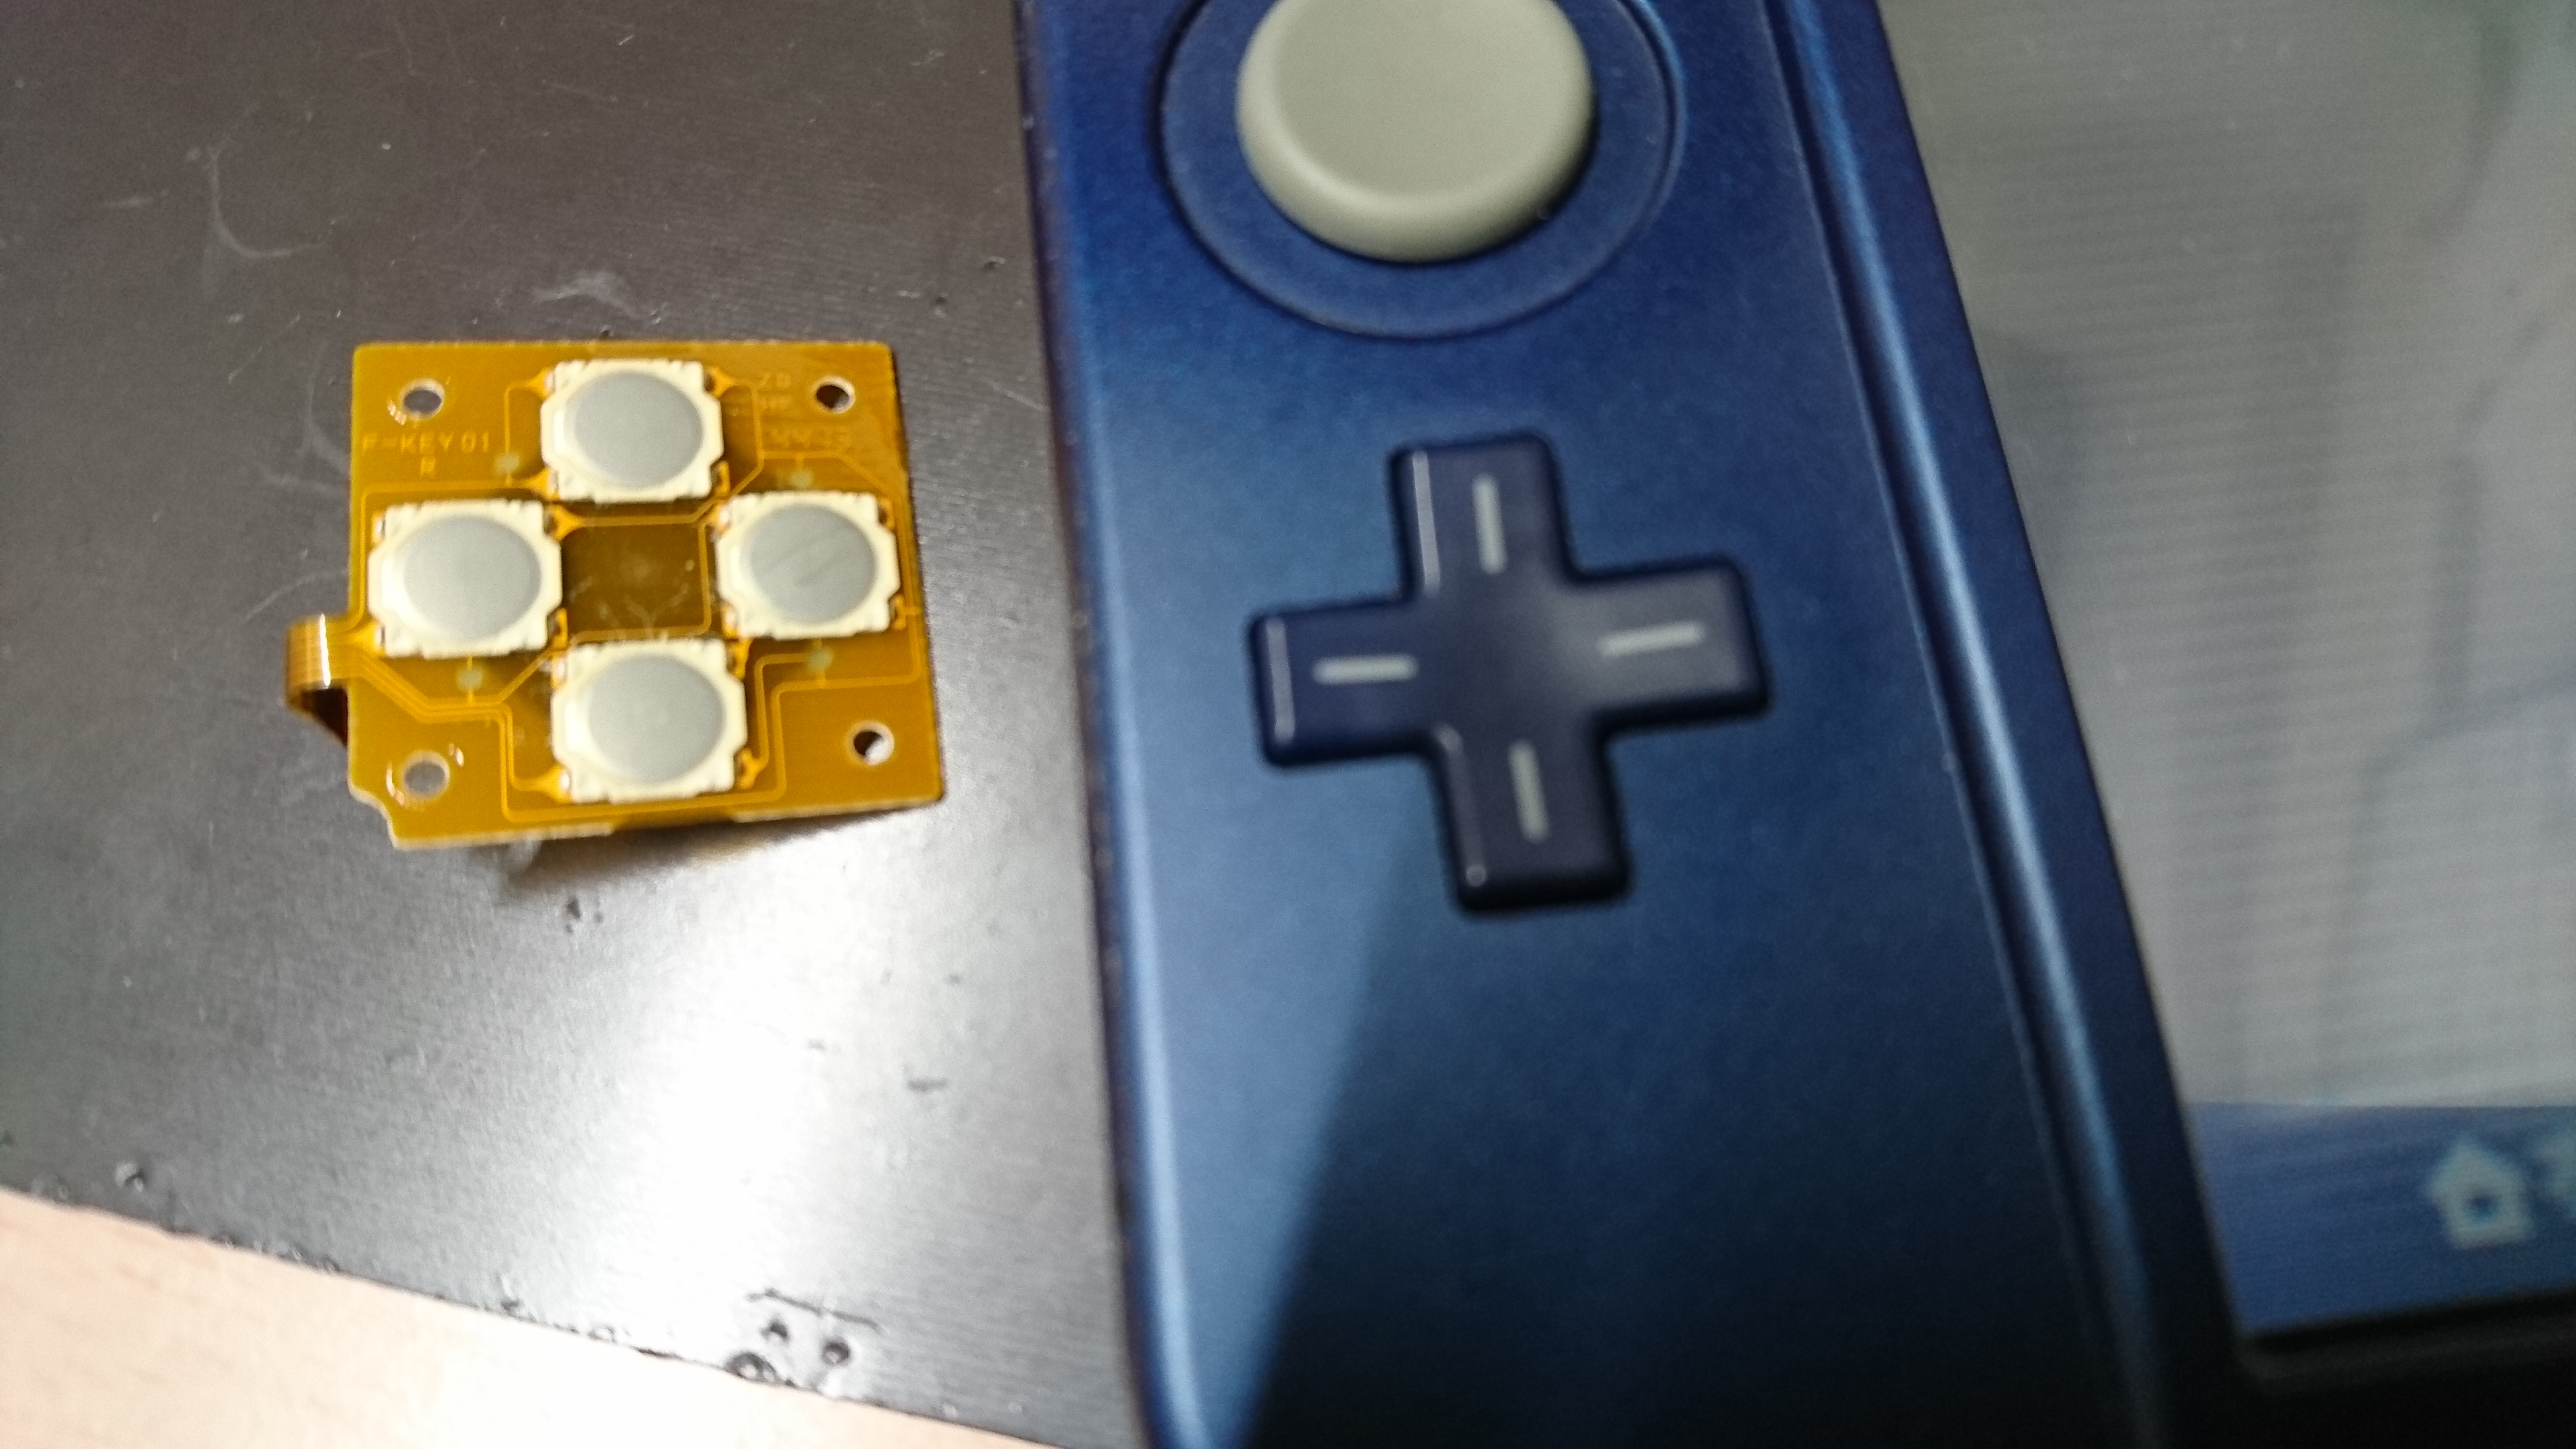 New３dsllの十字キー交換修理 Nintendo3ds Switch Psp 修理のゲームホスピタル Nintendo3ds ニンテンドーds Psp 修理